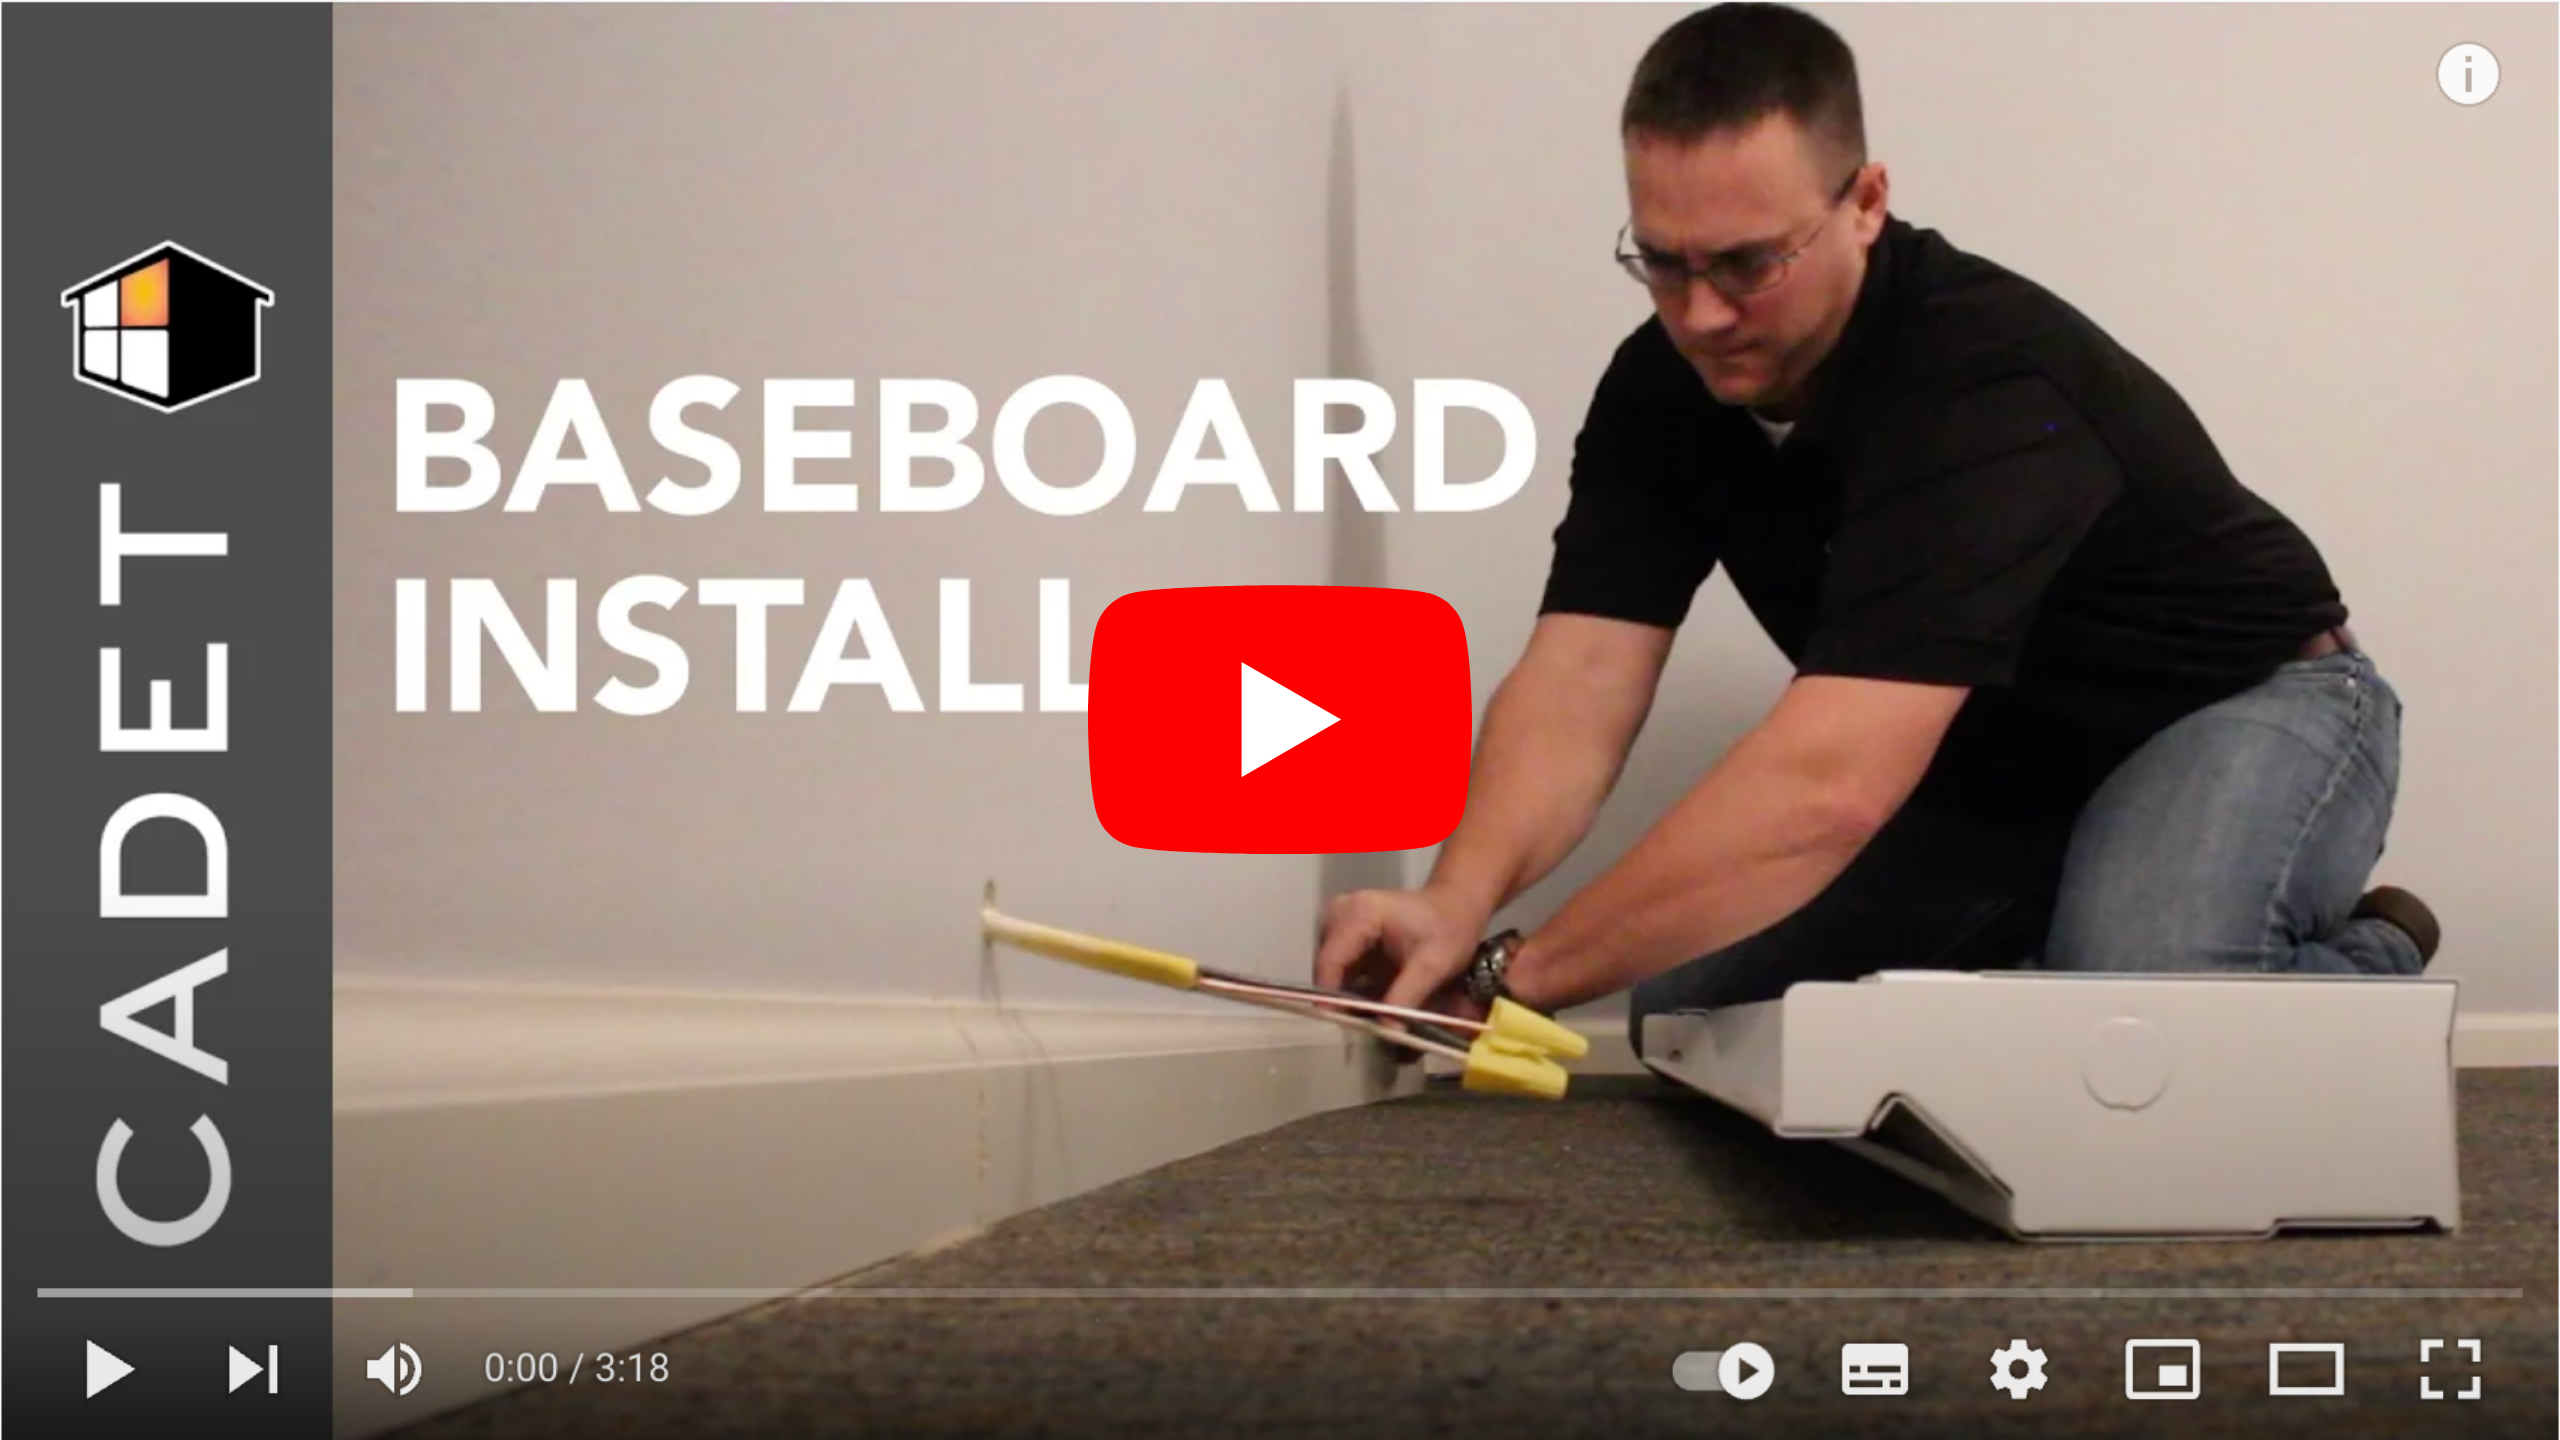 Baseboard install